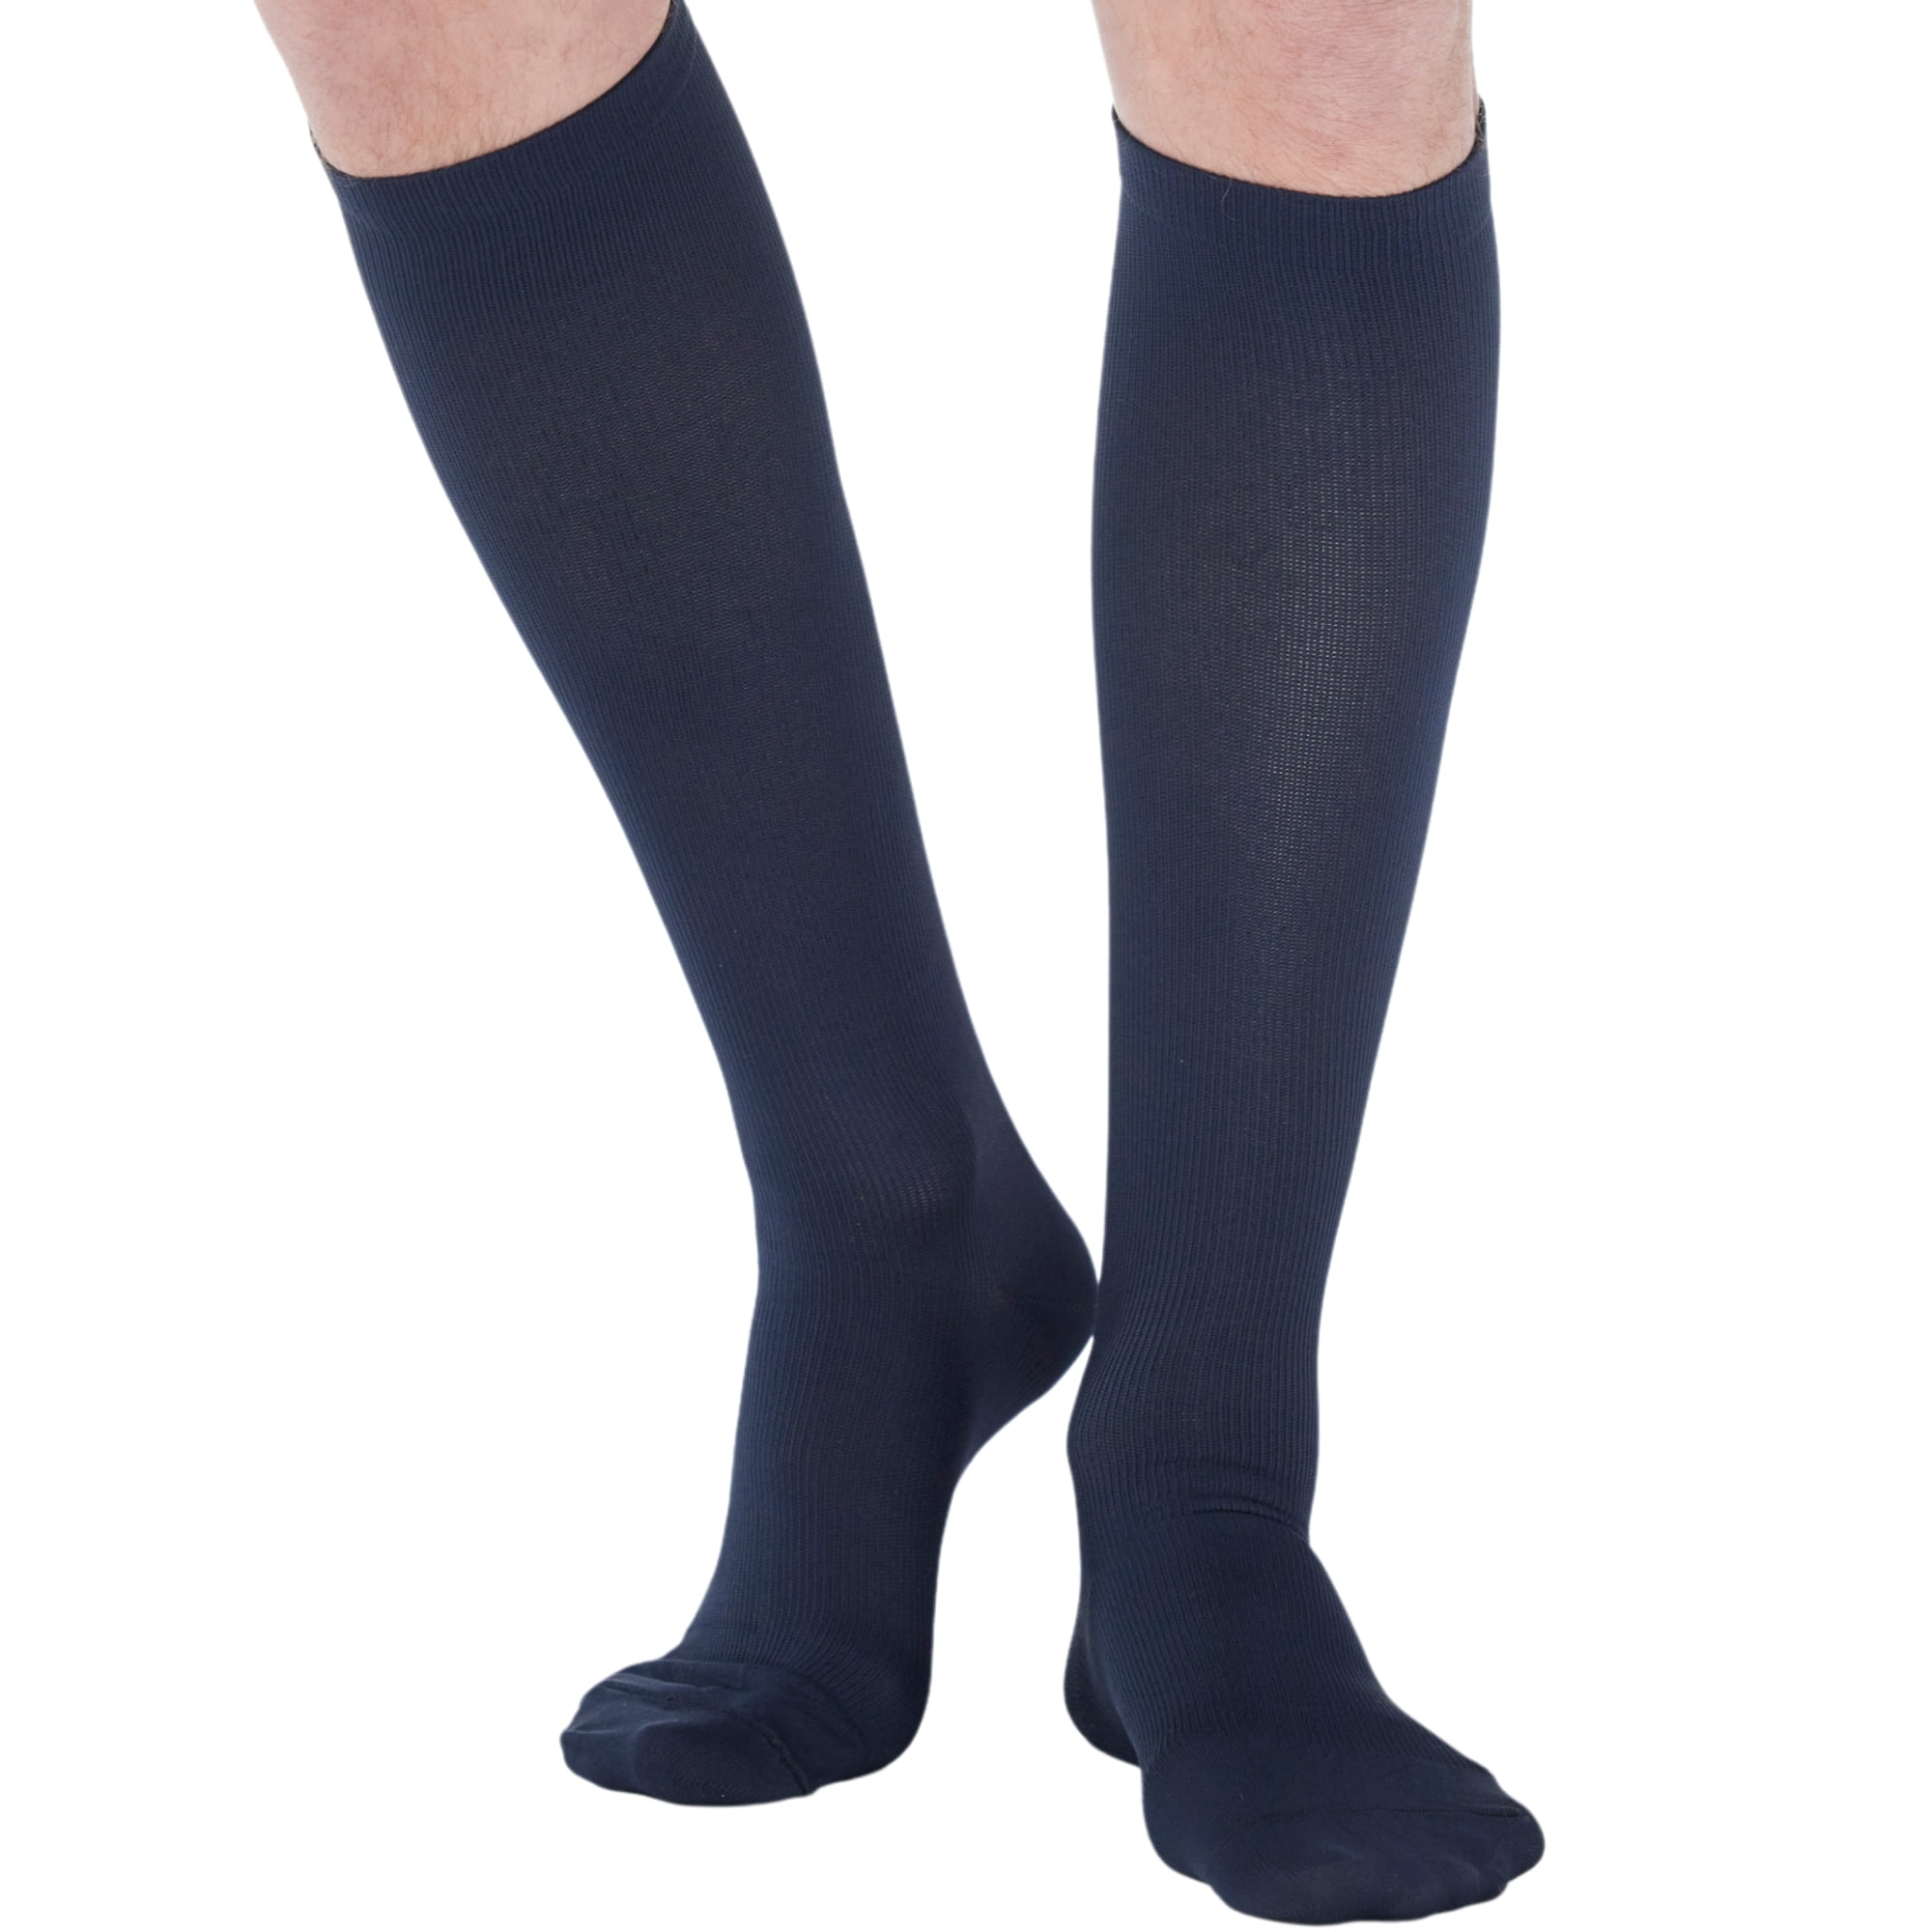 Made in USA - Compression Socks for Men 20-30 mmHg Running Travel ...